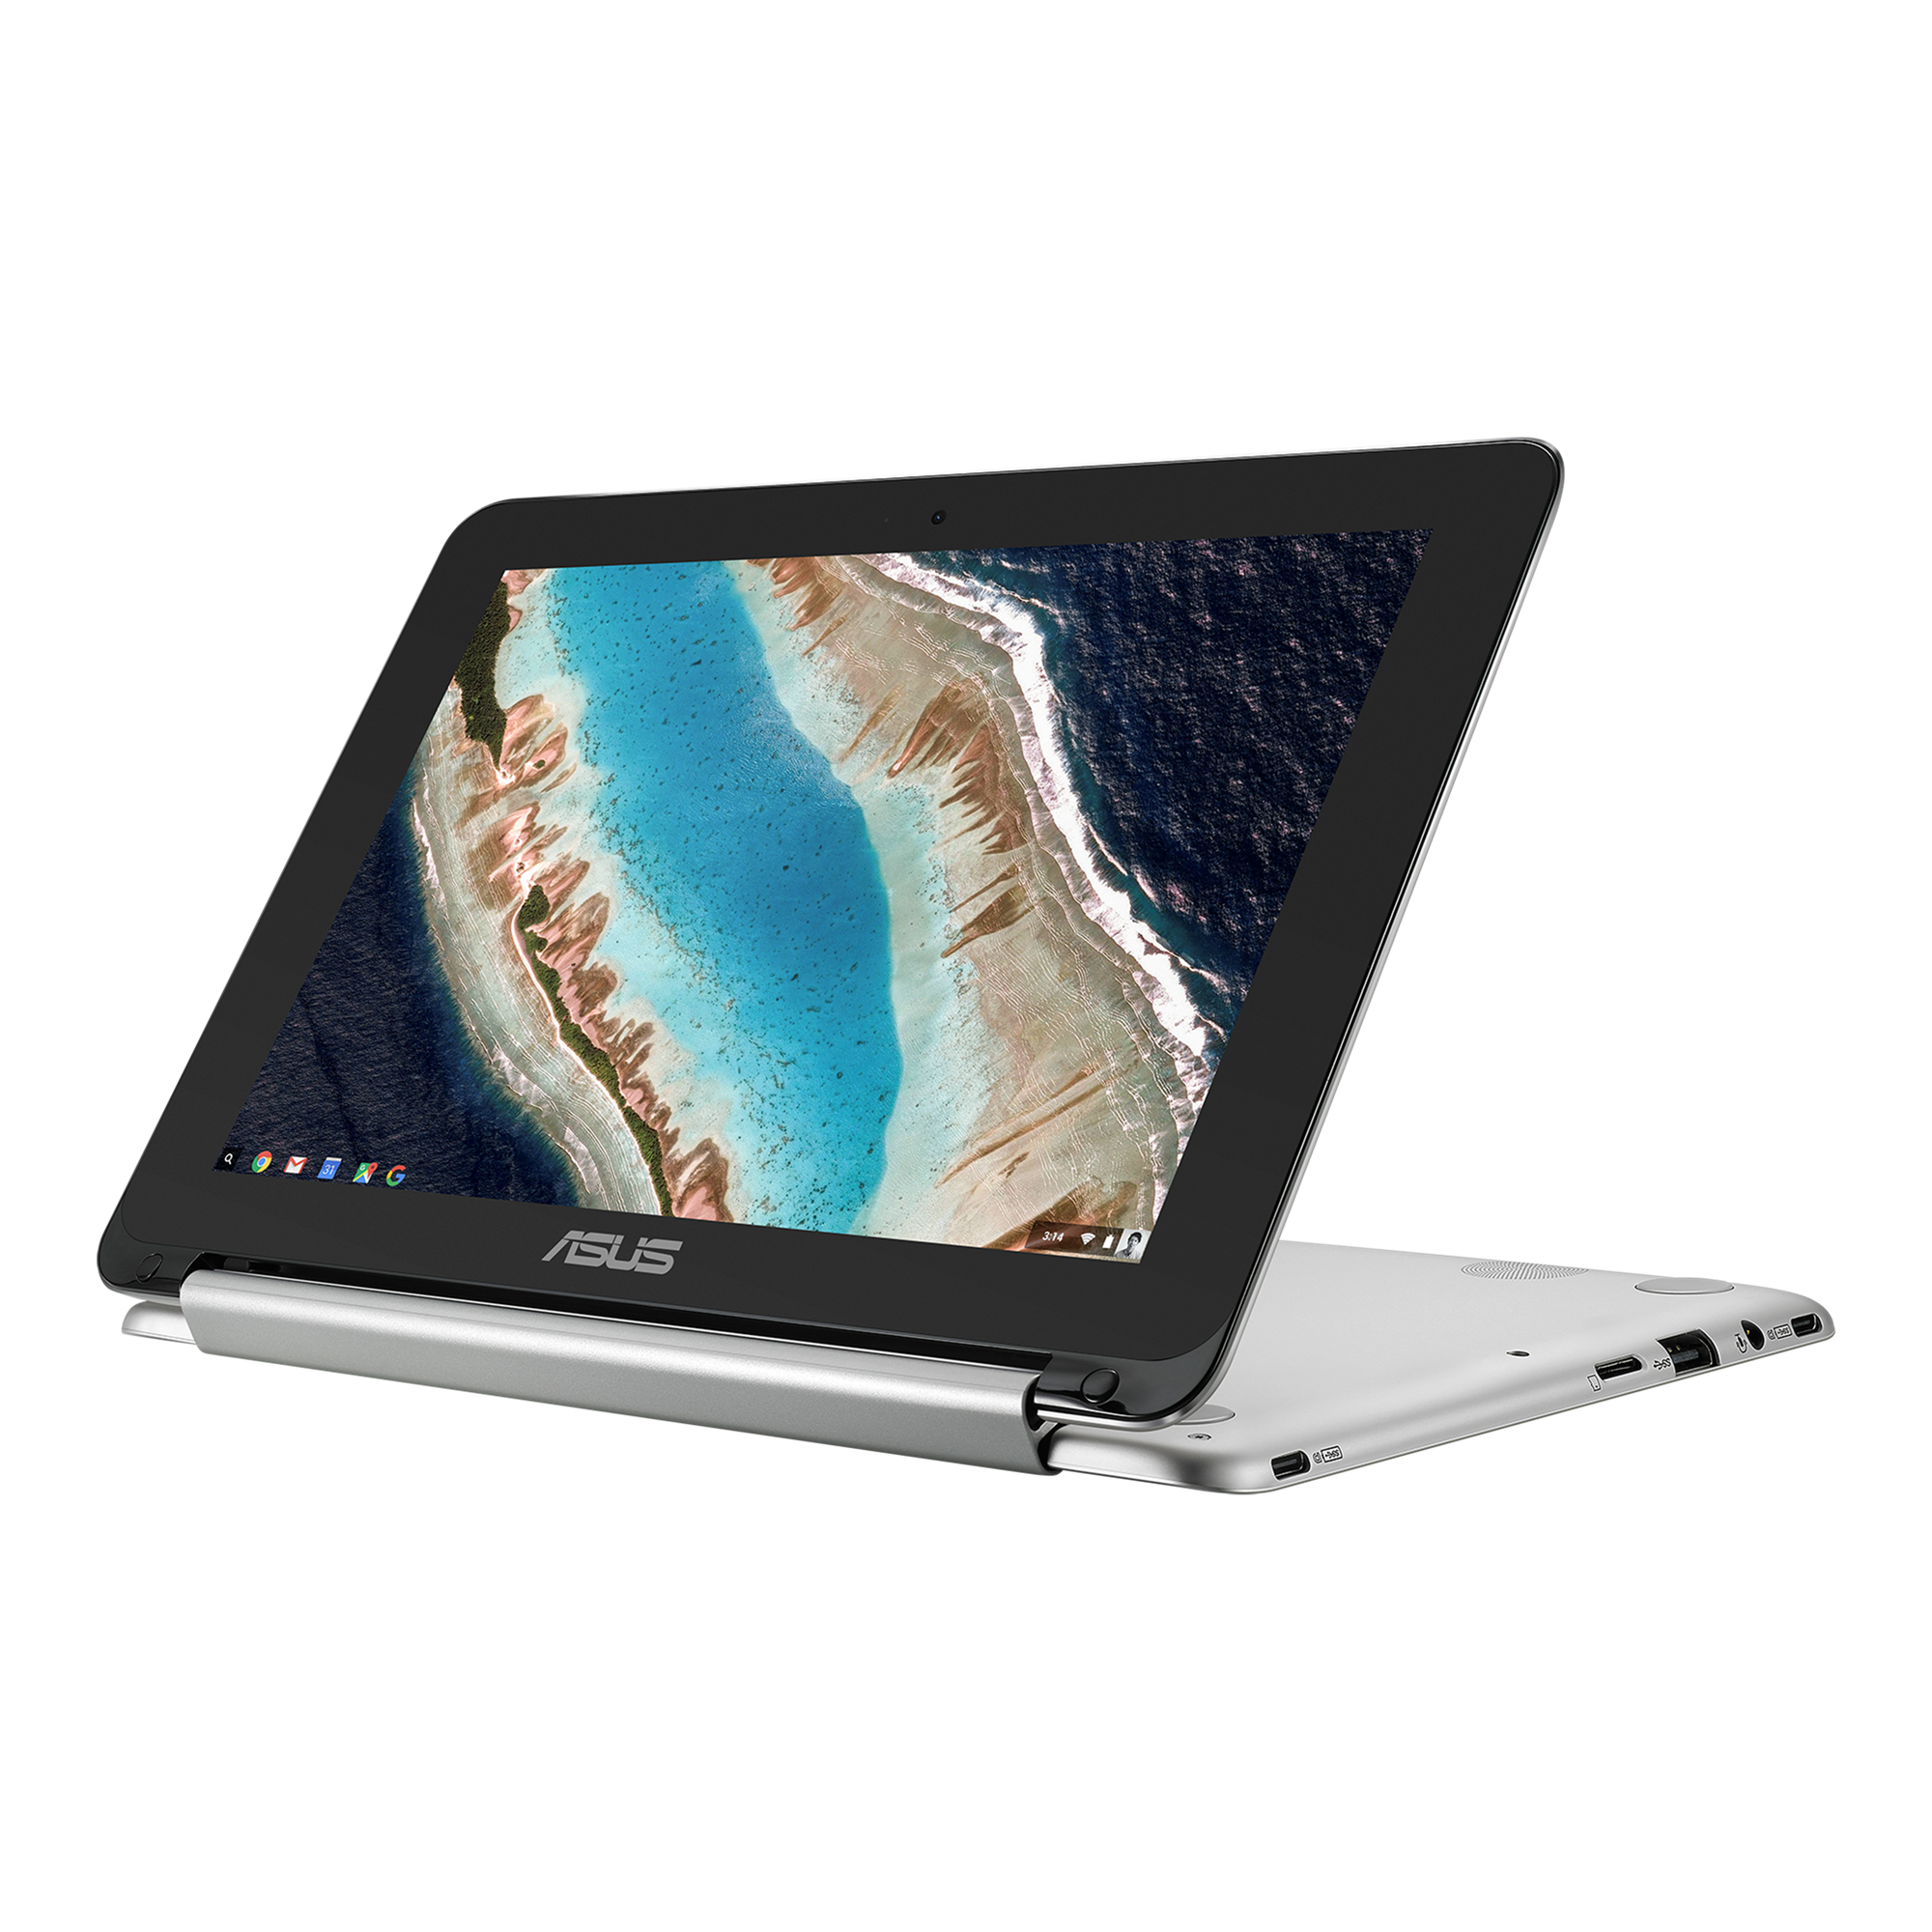 ASUS Chromebook Flip C101｜Laptops For Home｜ASUS Canada